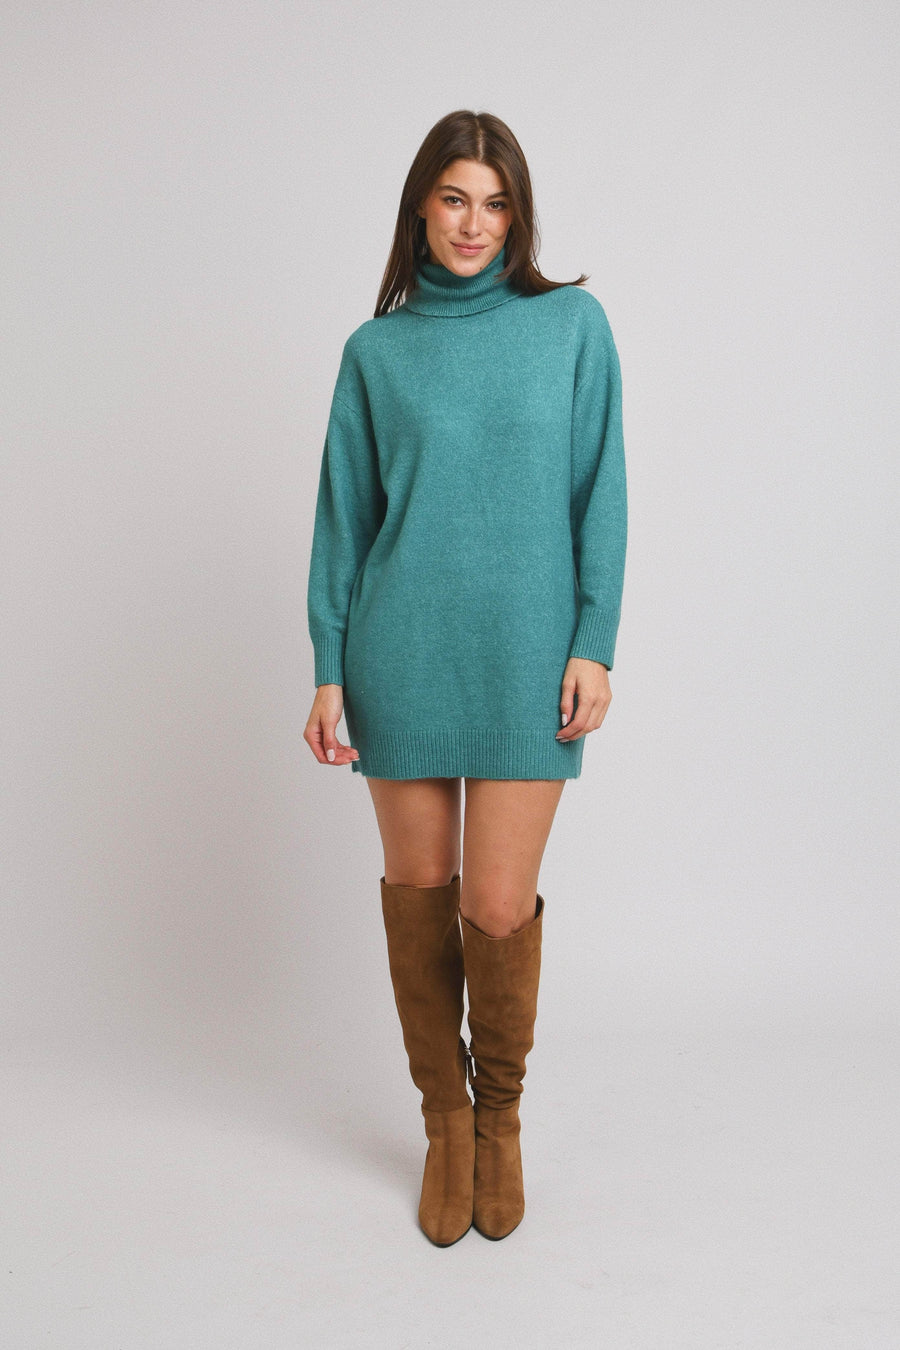 Stanton Sweater dress